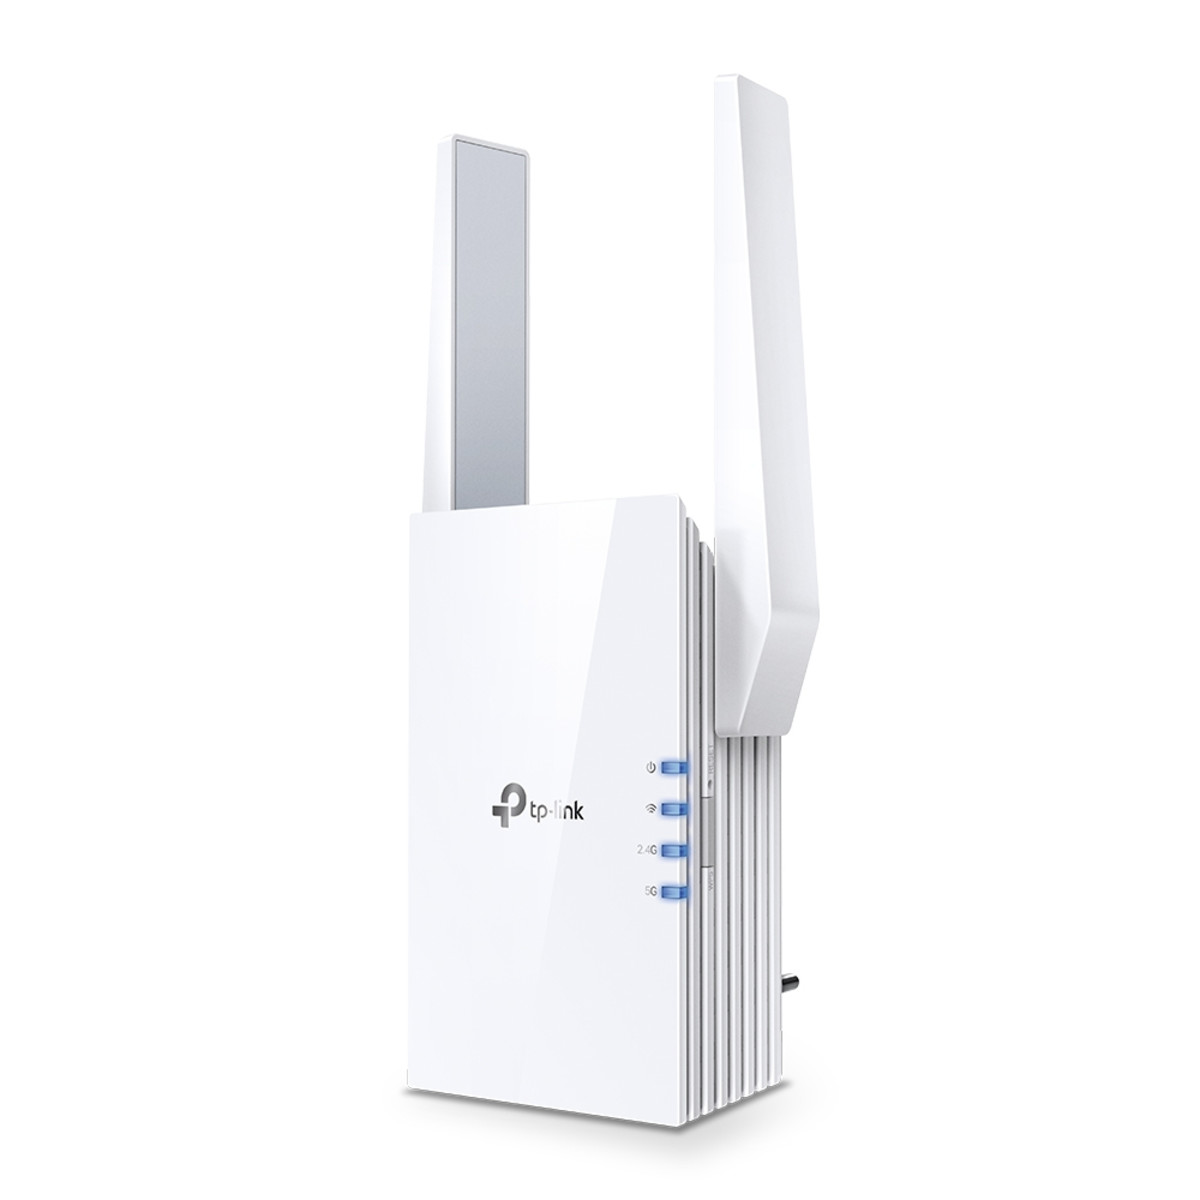 AX1800 Wi-Fi Range Extender